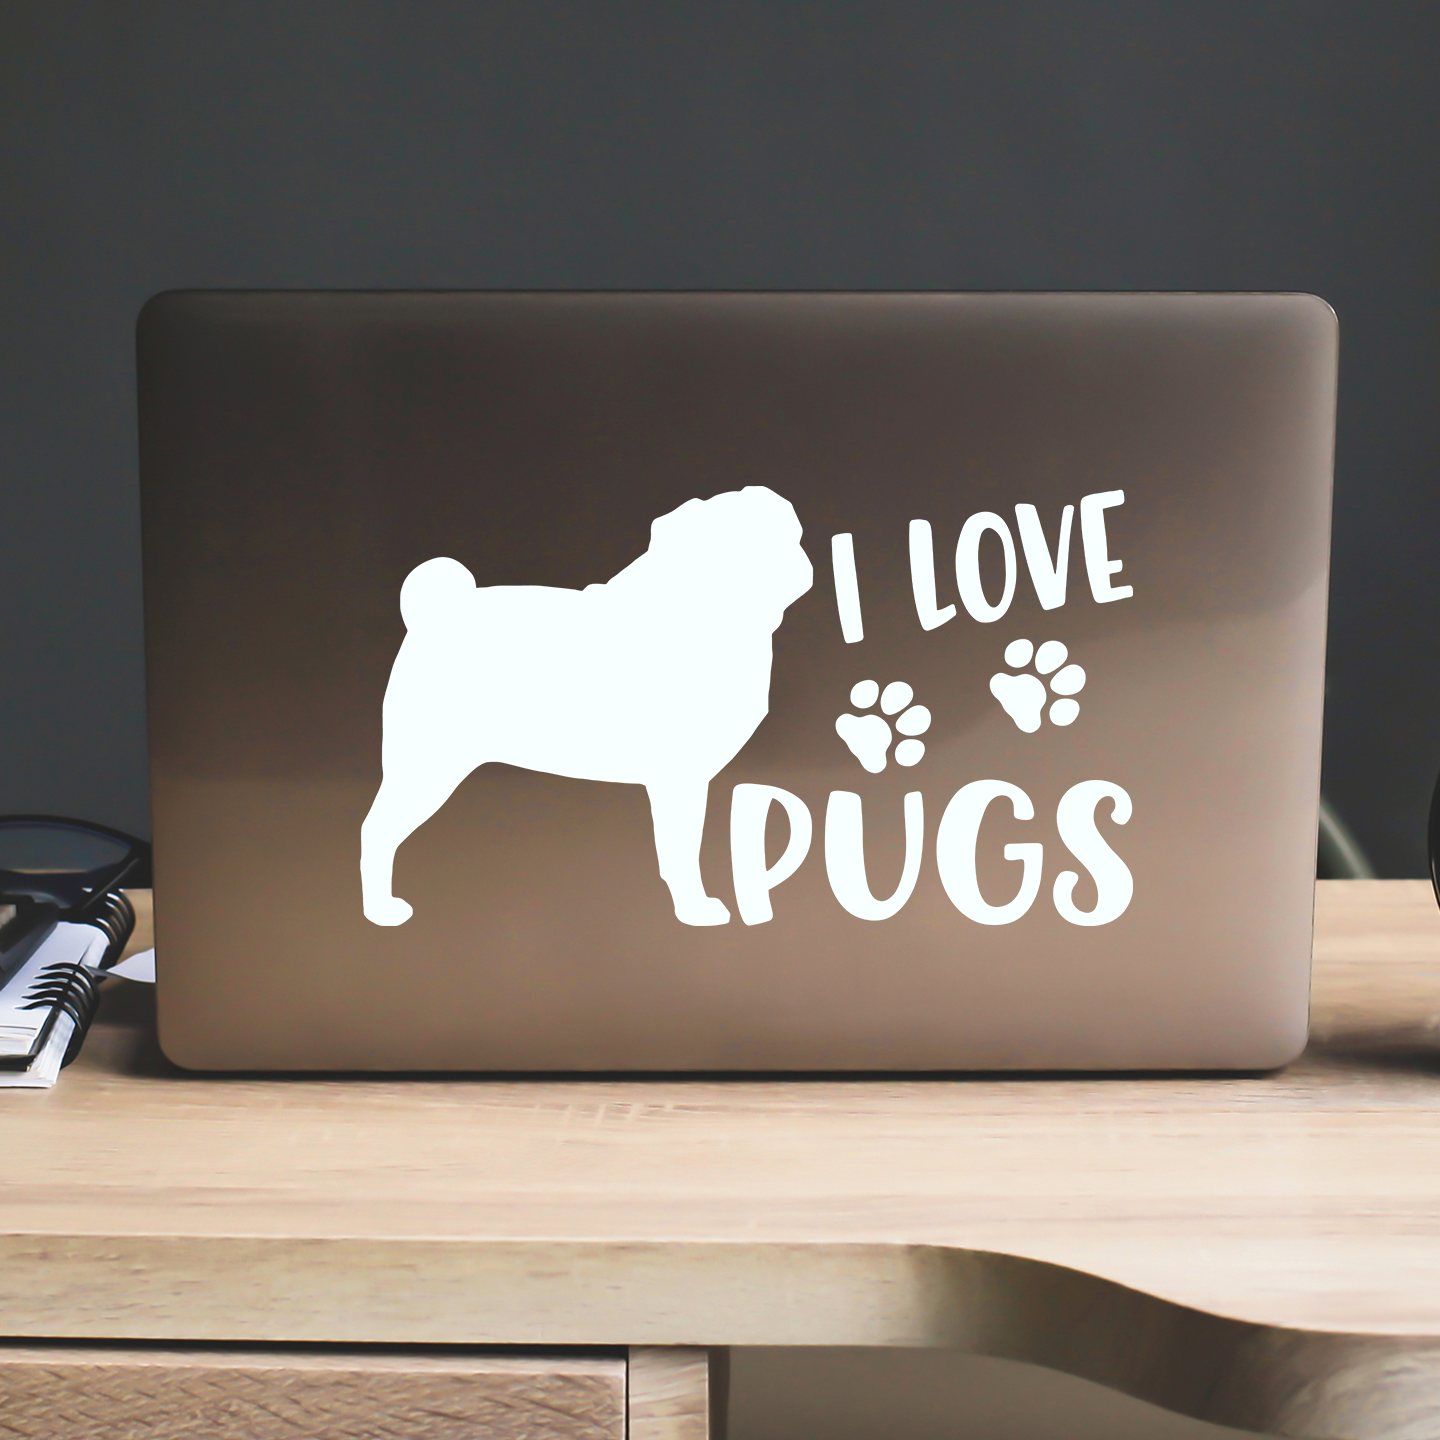 I Love Pugs Sticker